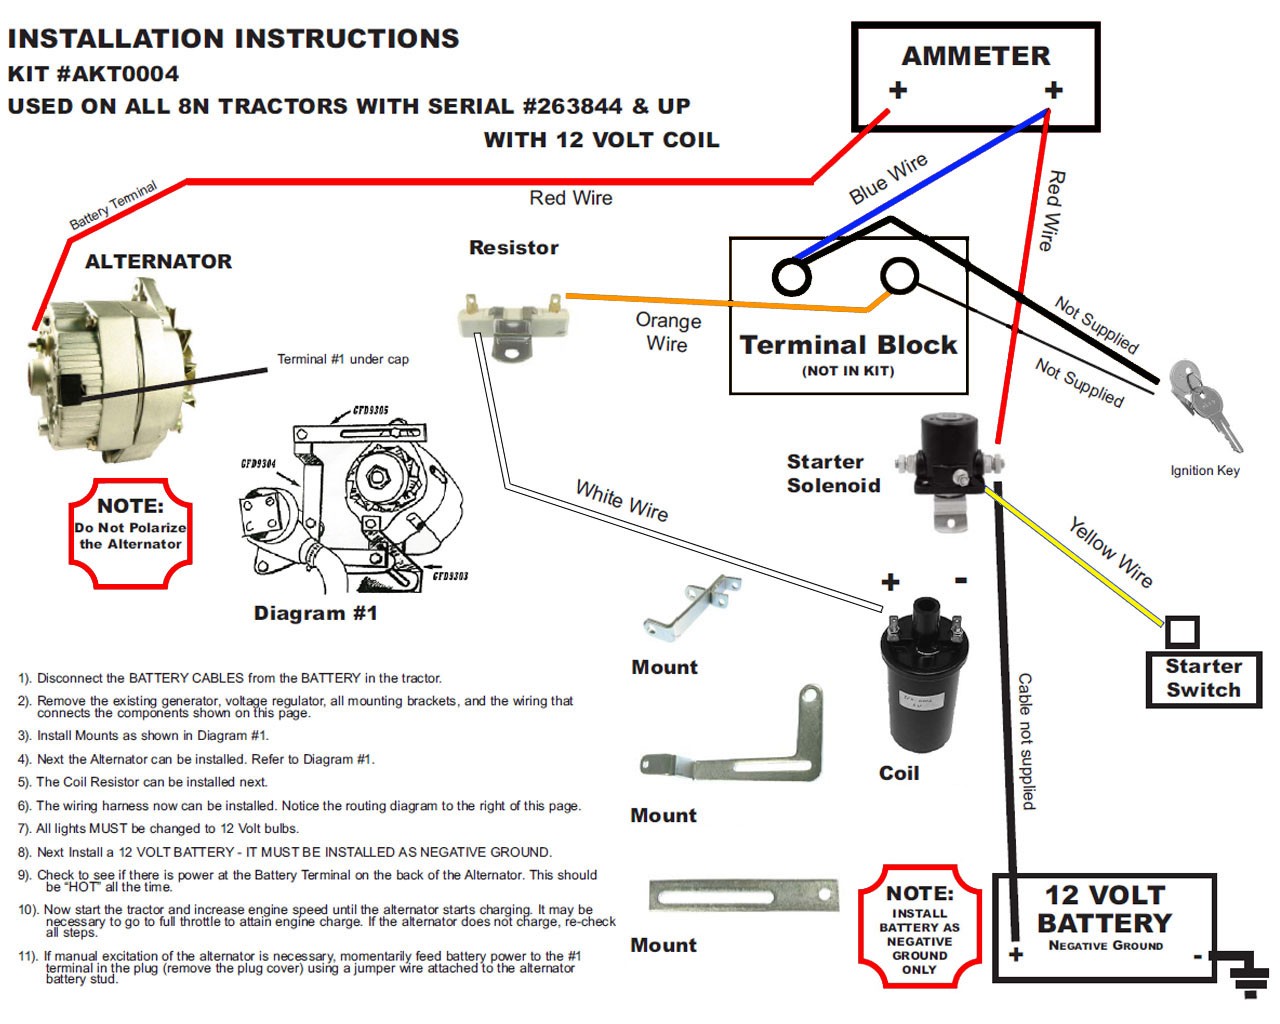 Rareelectrical NEW ALTERNATOR GENERATOR CONVERSION KIT ... wire diagram allis chalmers b12 